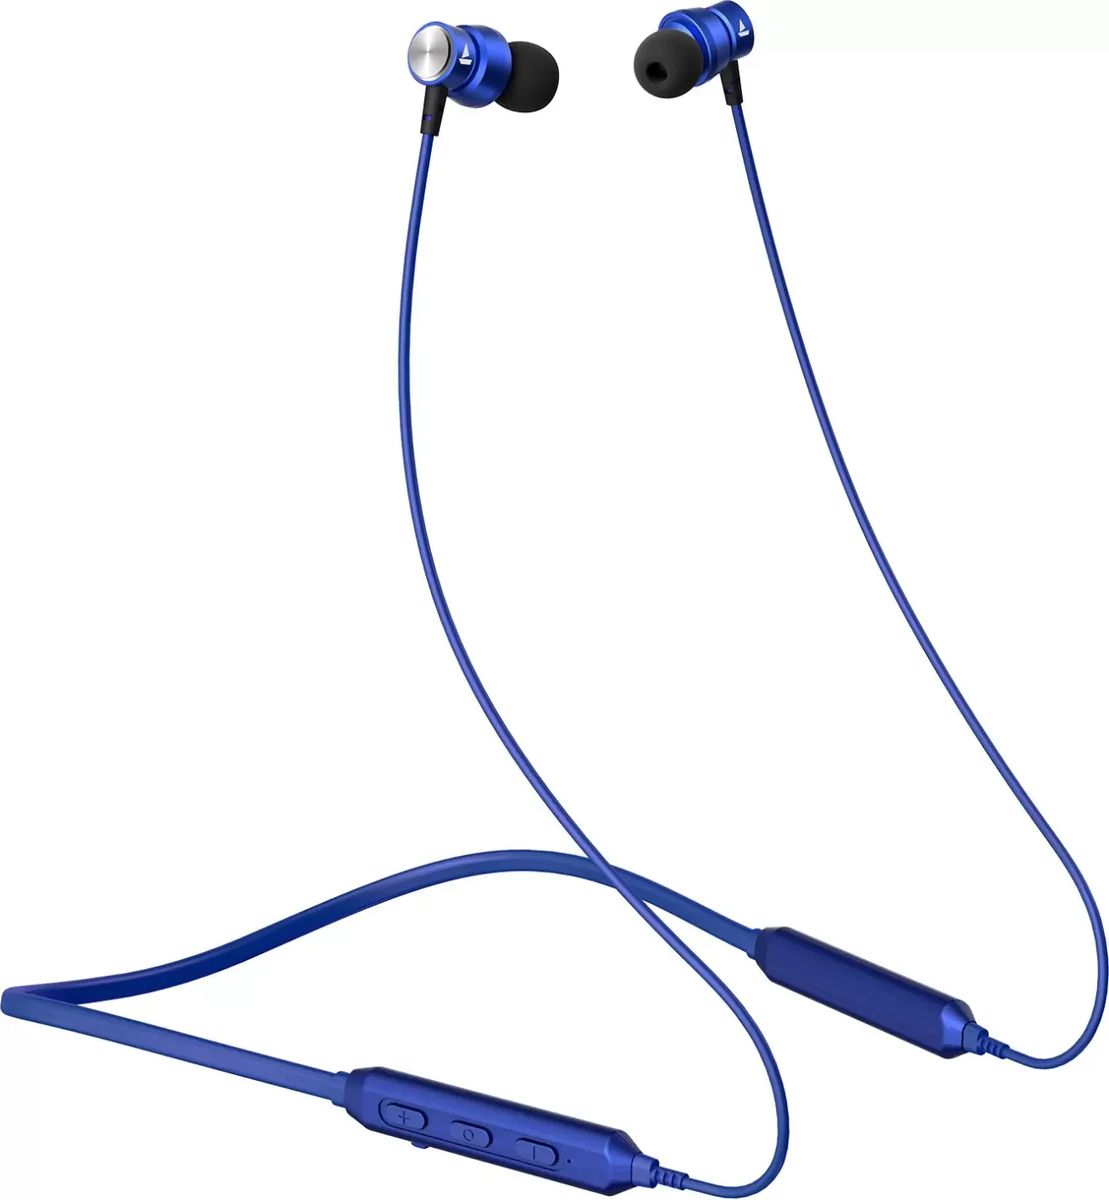 Boat Rockerz 240 Bluetooth Headset Best Price In India 21 Specs Review Smartprix